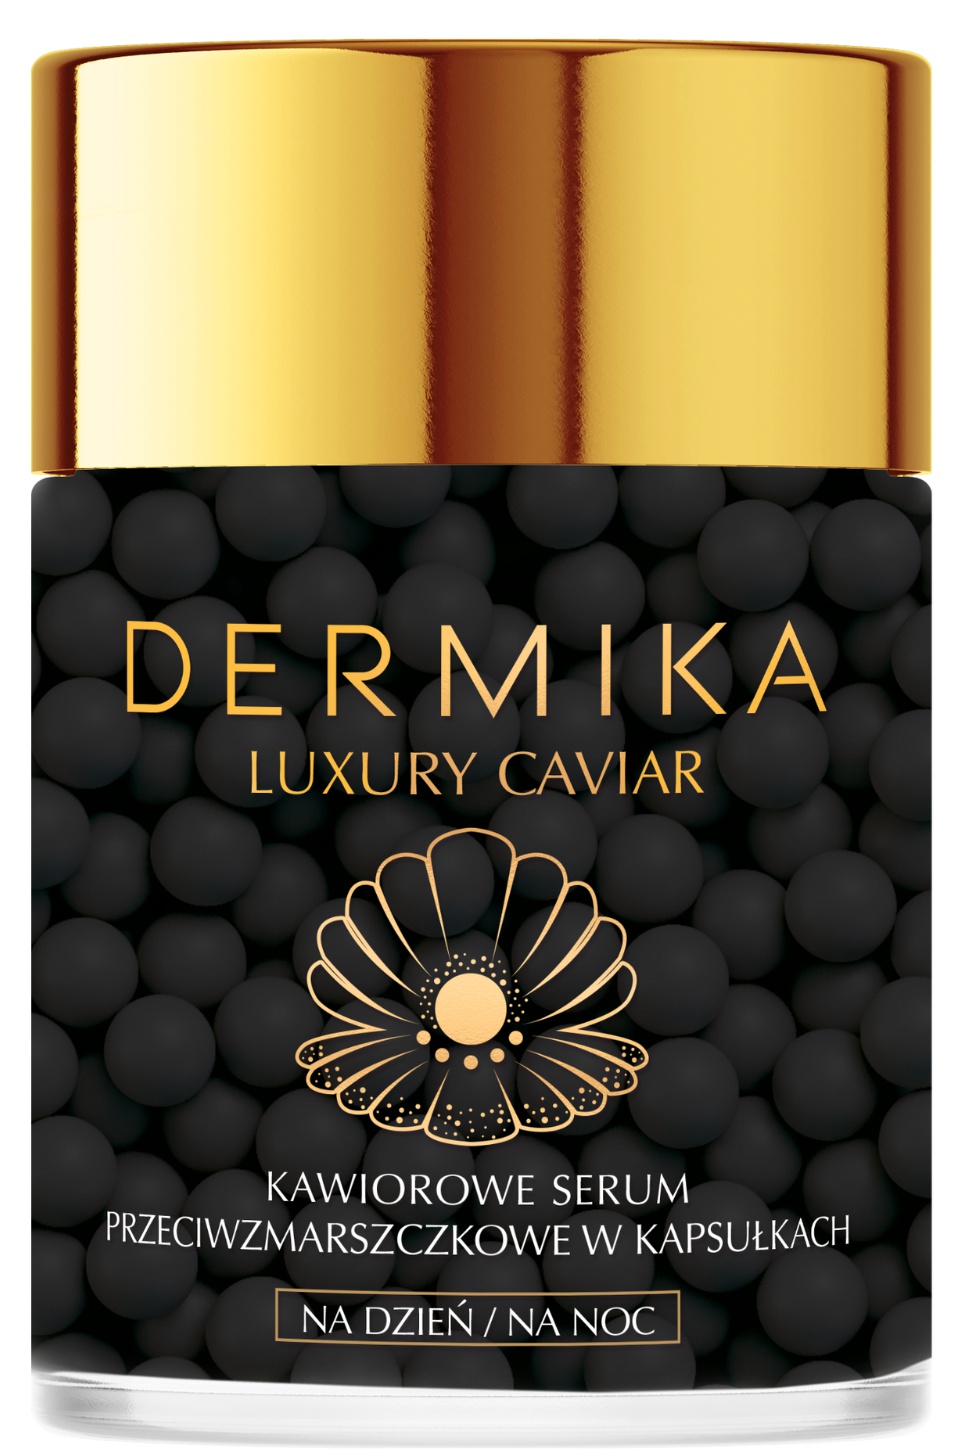 Dermika Luxury Caviar Anti-Wrinkle Serum In Capsules